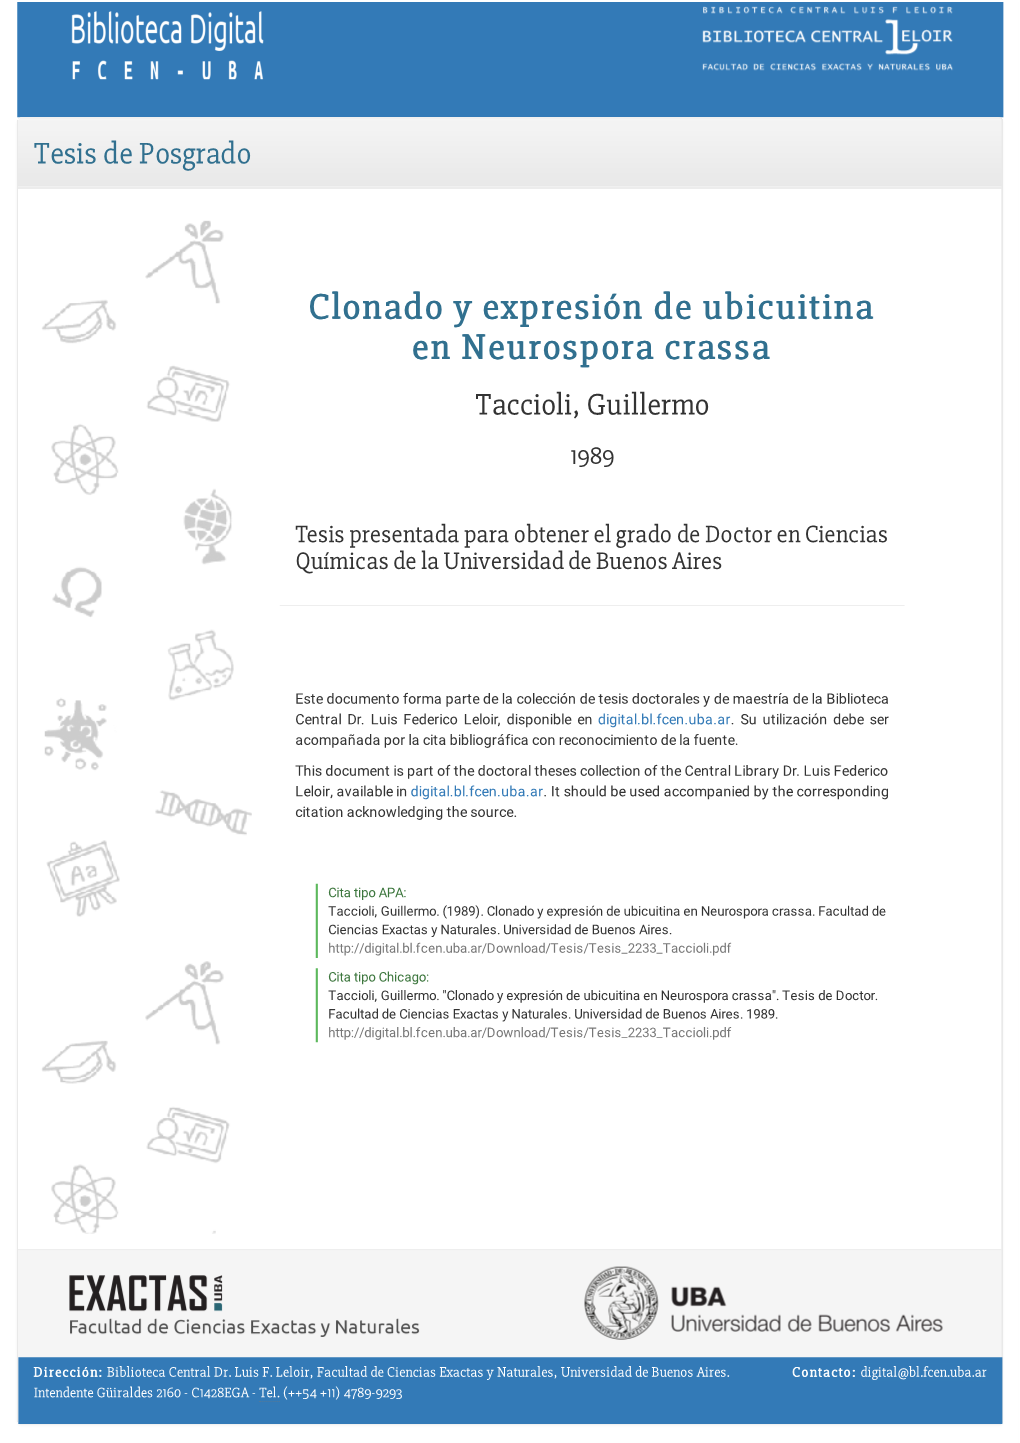 Clonado Y Expresión De Ubicuitina En Neurospora Crassa Taccioli, Guillermo 1989